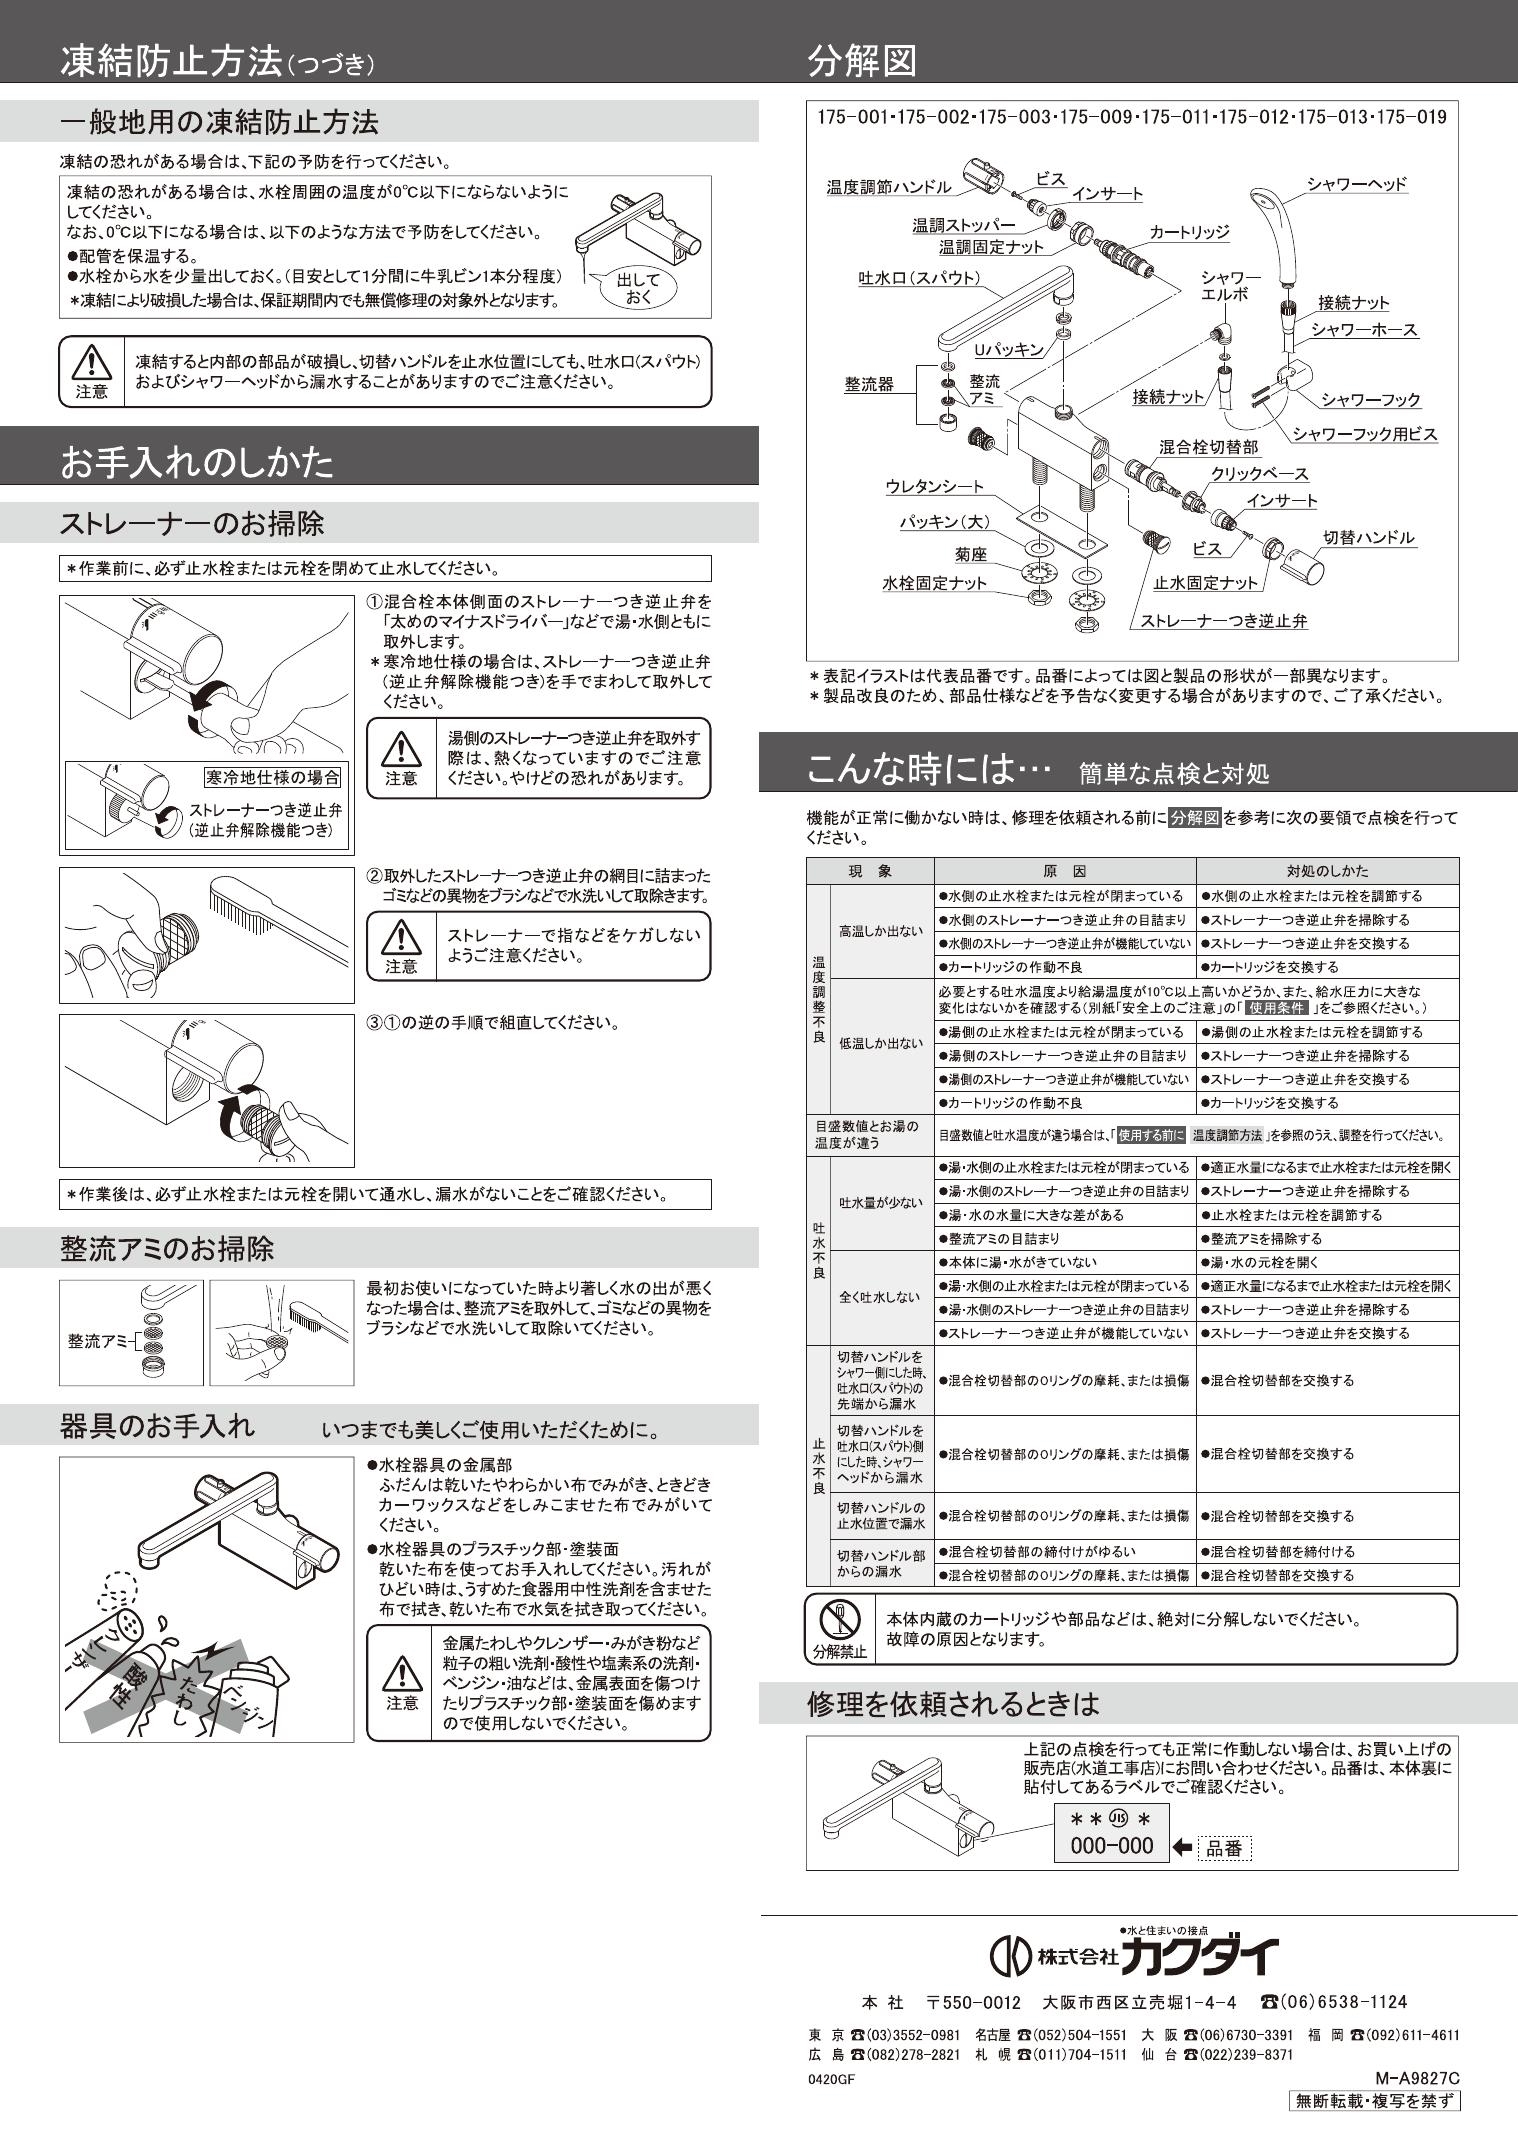 175-002 KAKUDAI カクダイ サーモスタットシャワ混合栓 デッキタイプ